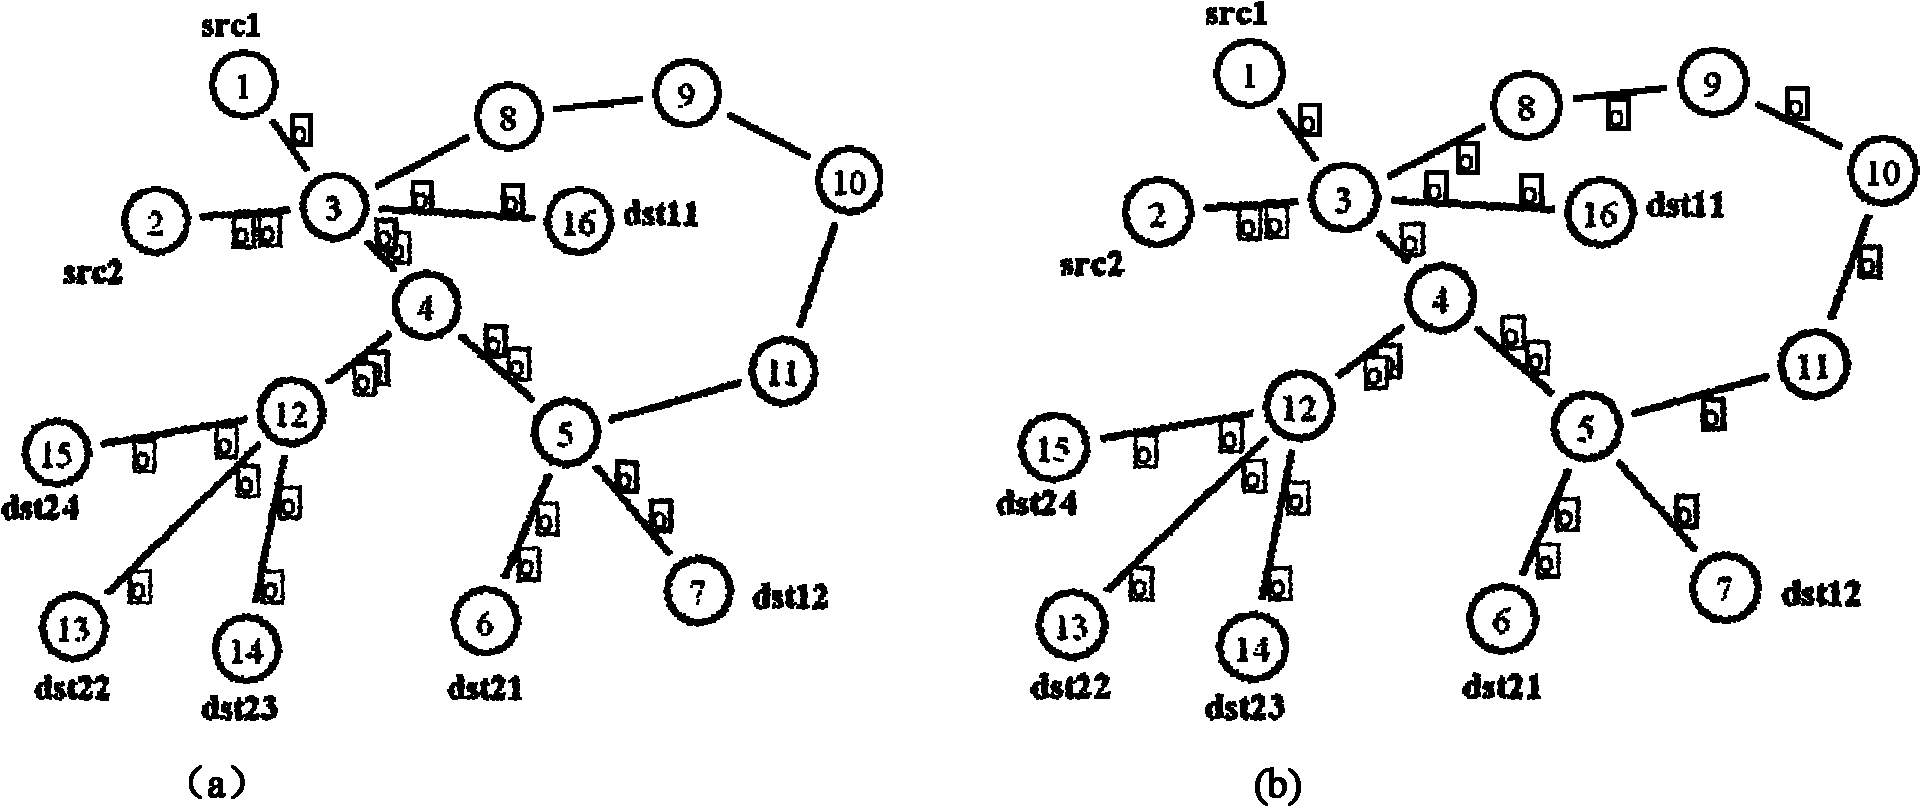 Method for realizing multisource multicast traffic balance based on ant colony algorithm